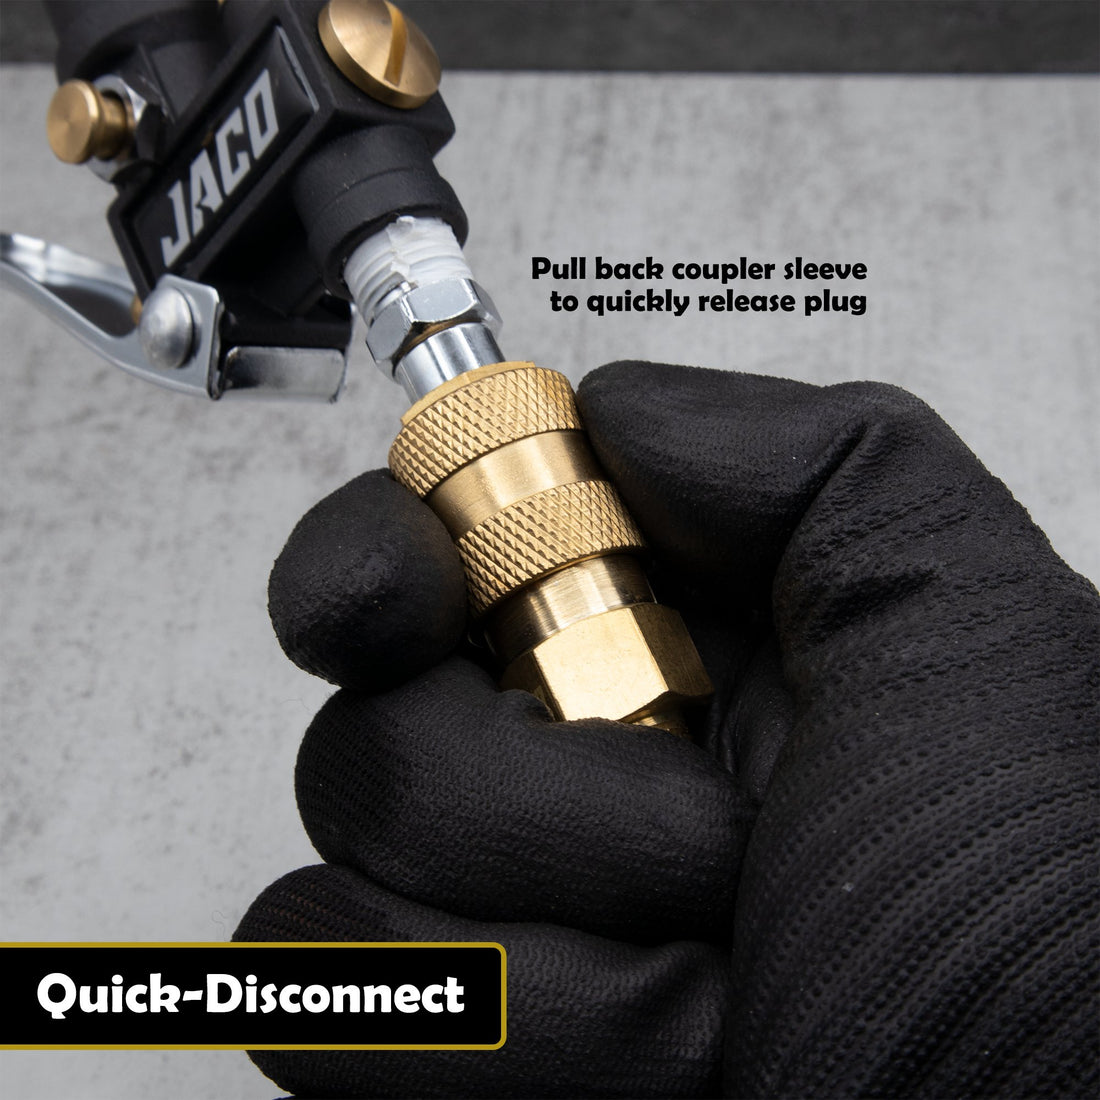 Hi-Flo Quick Connect Air Fittings | Plug & Coupler Kit - 1/4" NPT (Set of 12) - Diesel Freak